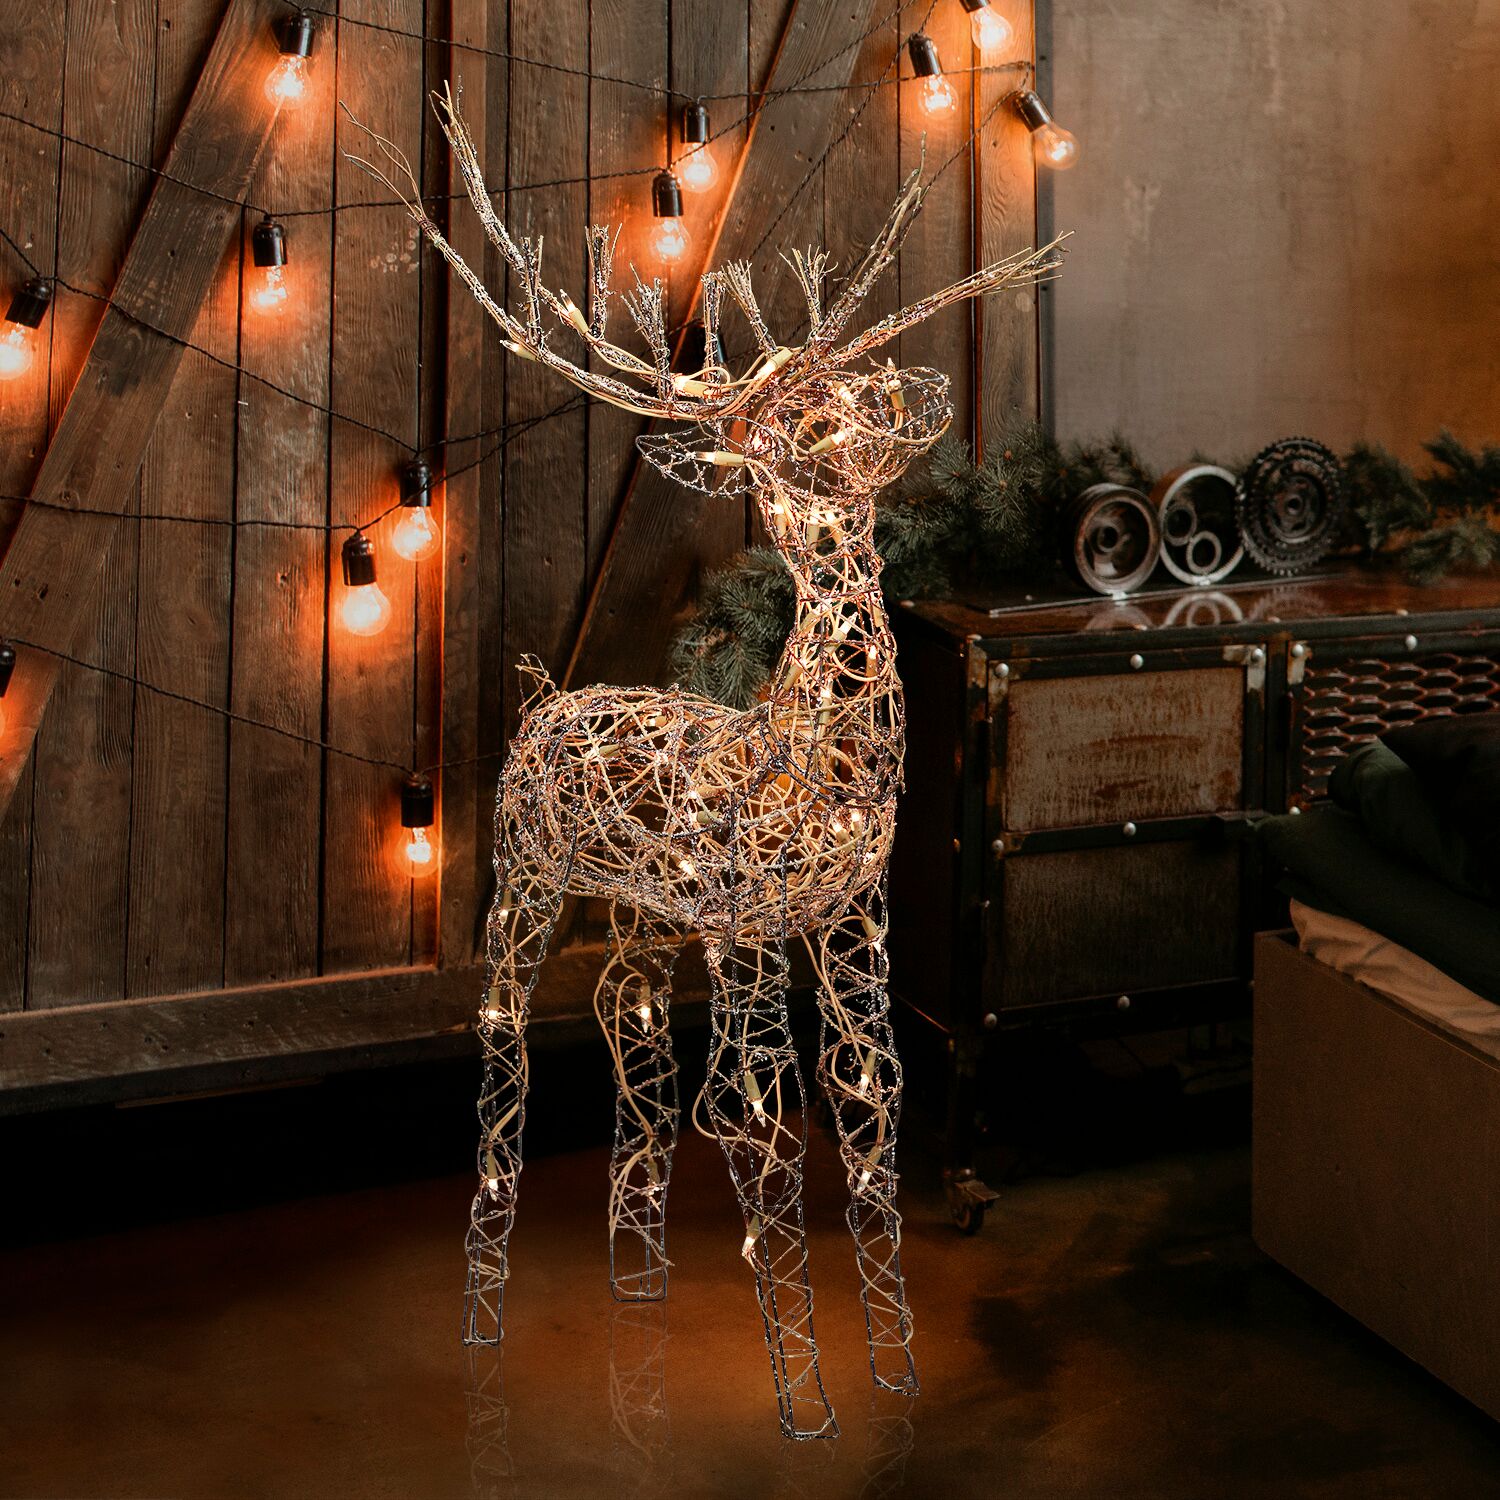 Alpine Corporation Outdoor Holiday Rattan Reindeer with Halogen Lights - image 1 of 16